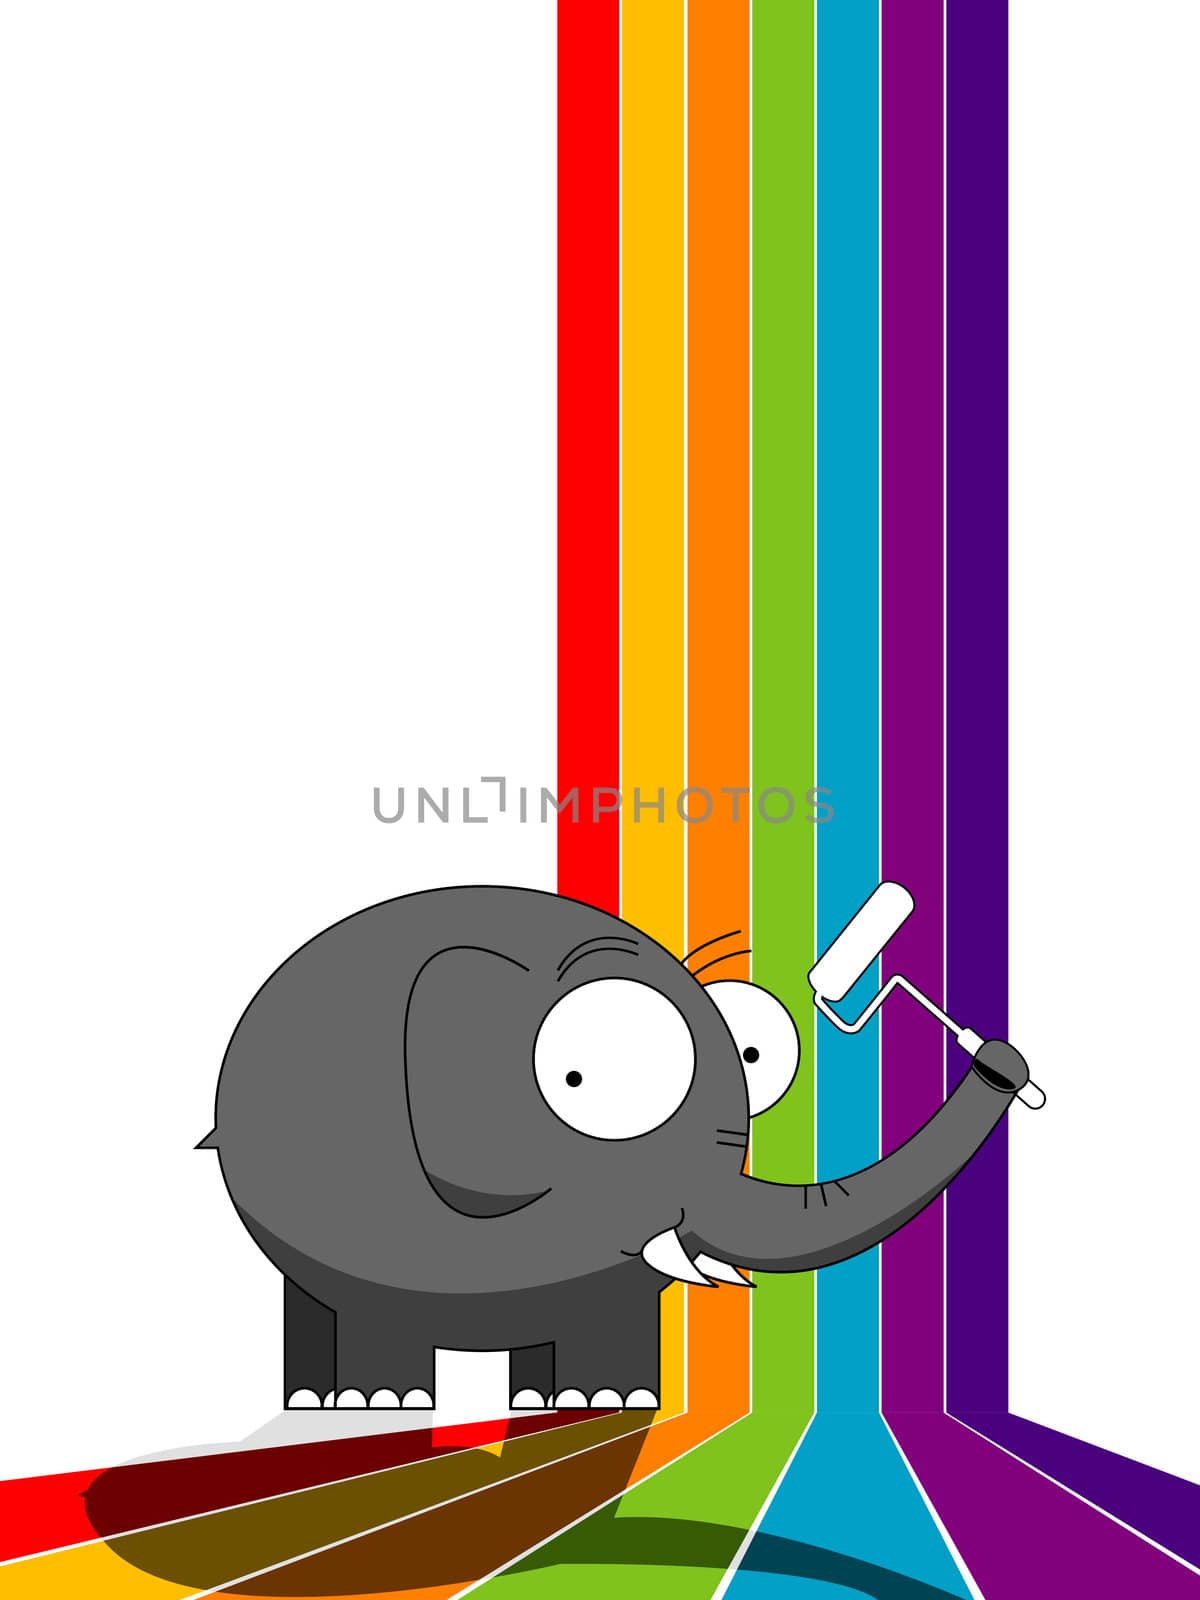 Elephant painting a rainbow by Lirch